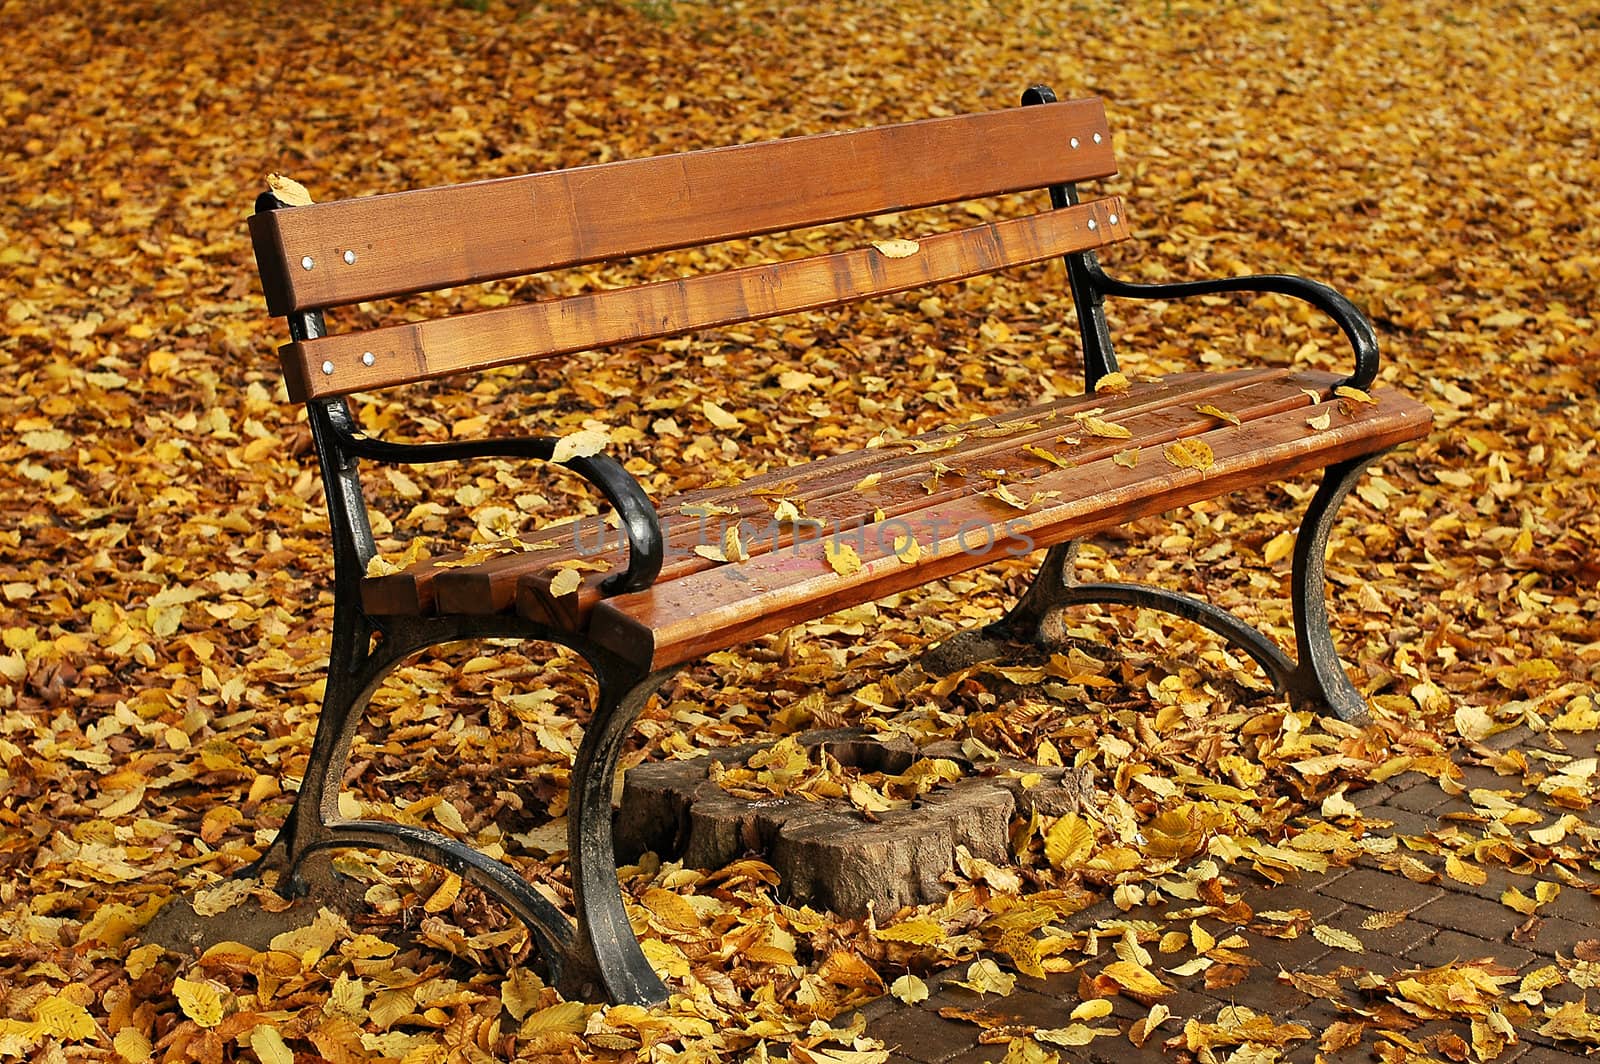 wooden bench in autumn, yellow leafs fallen on ground